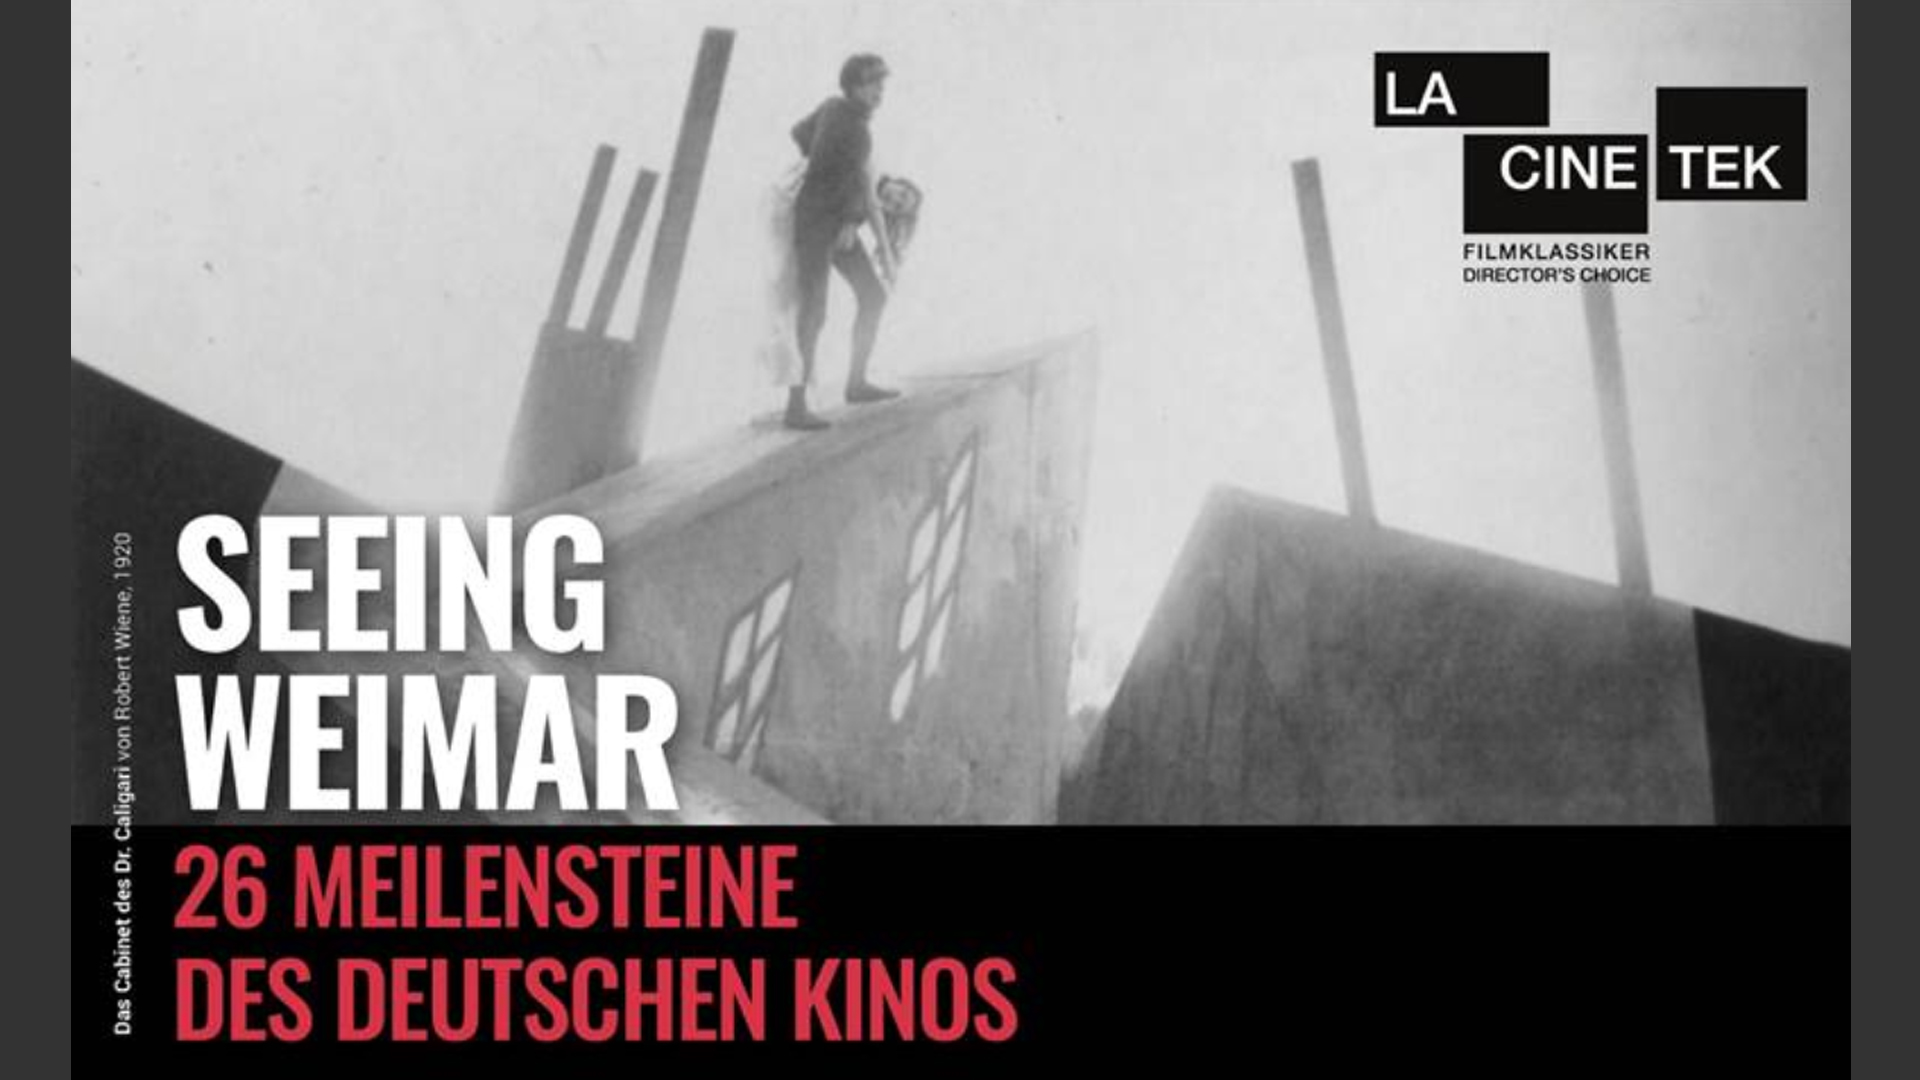 LaCinetek: Seeing Weimar